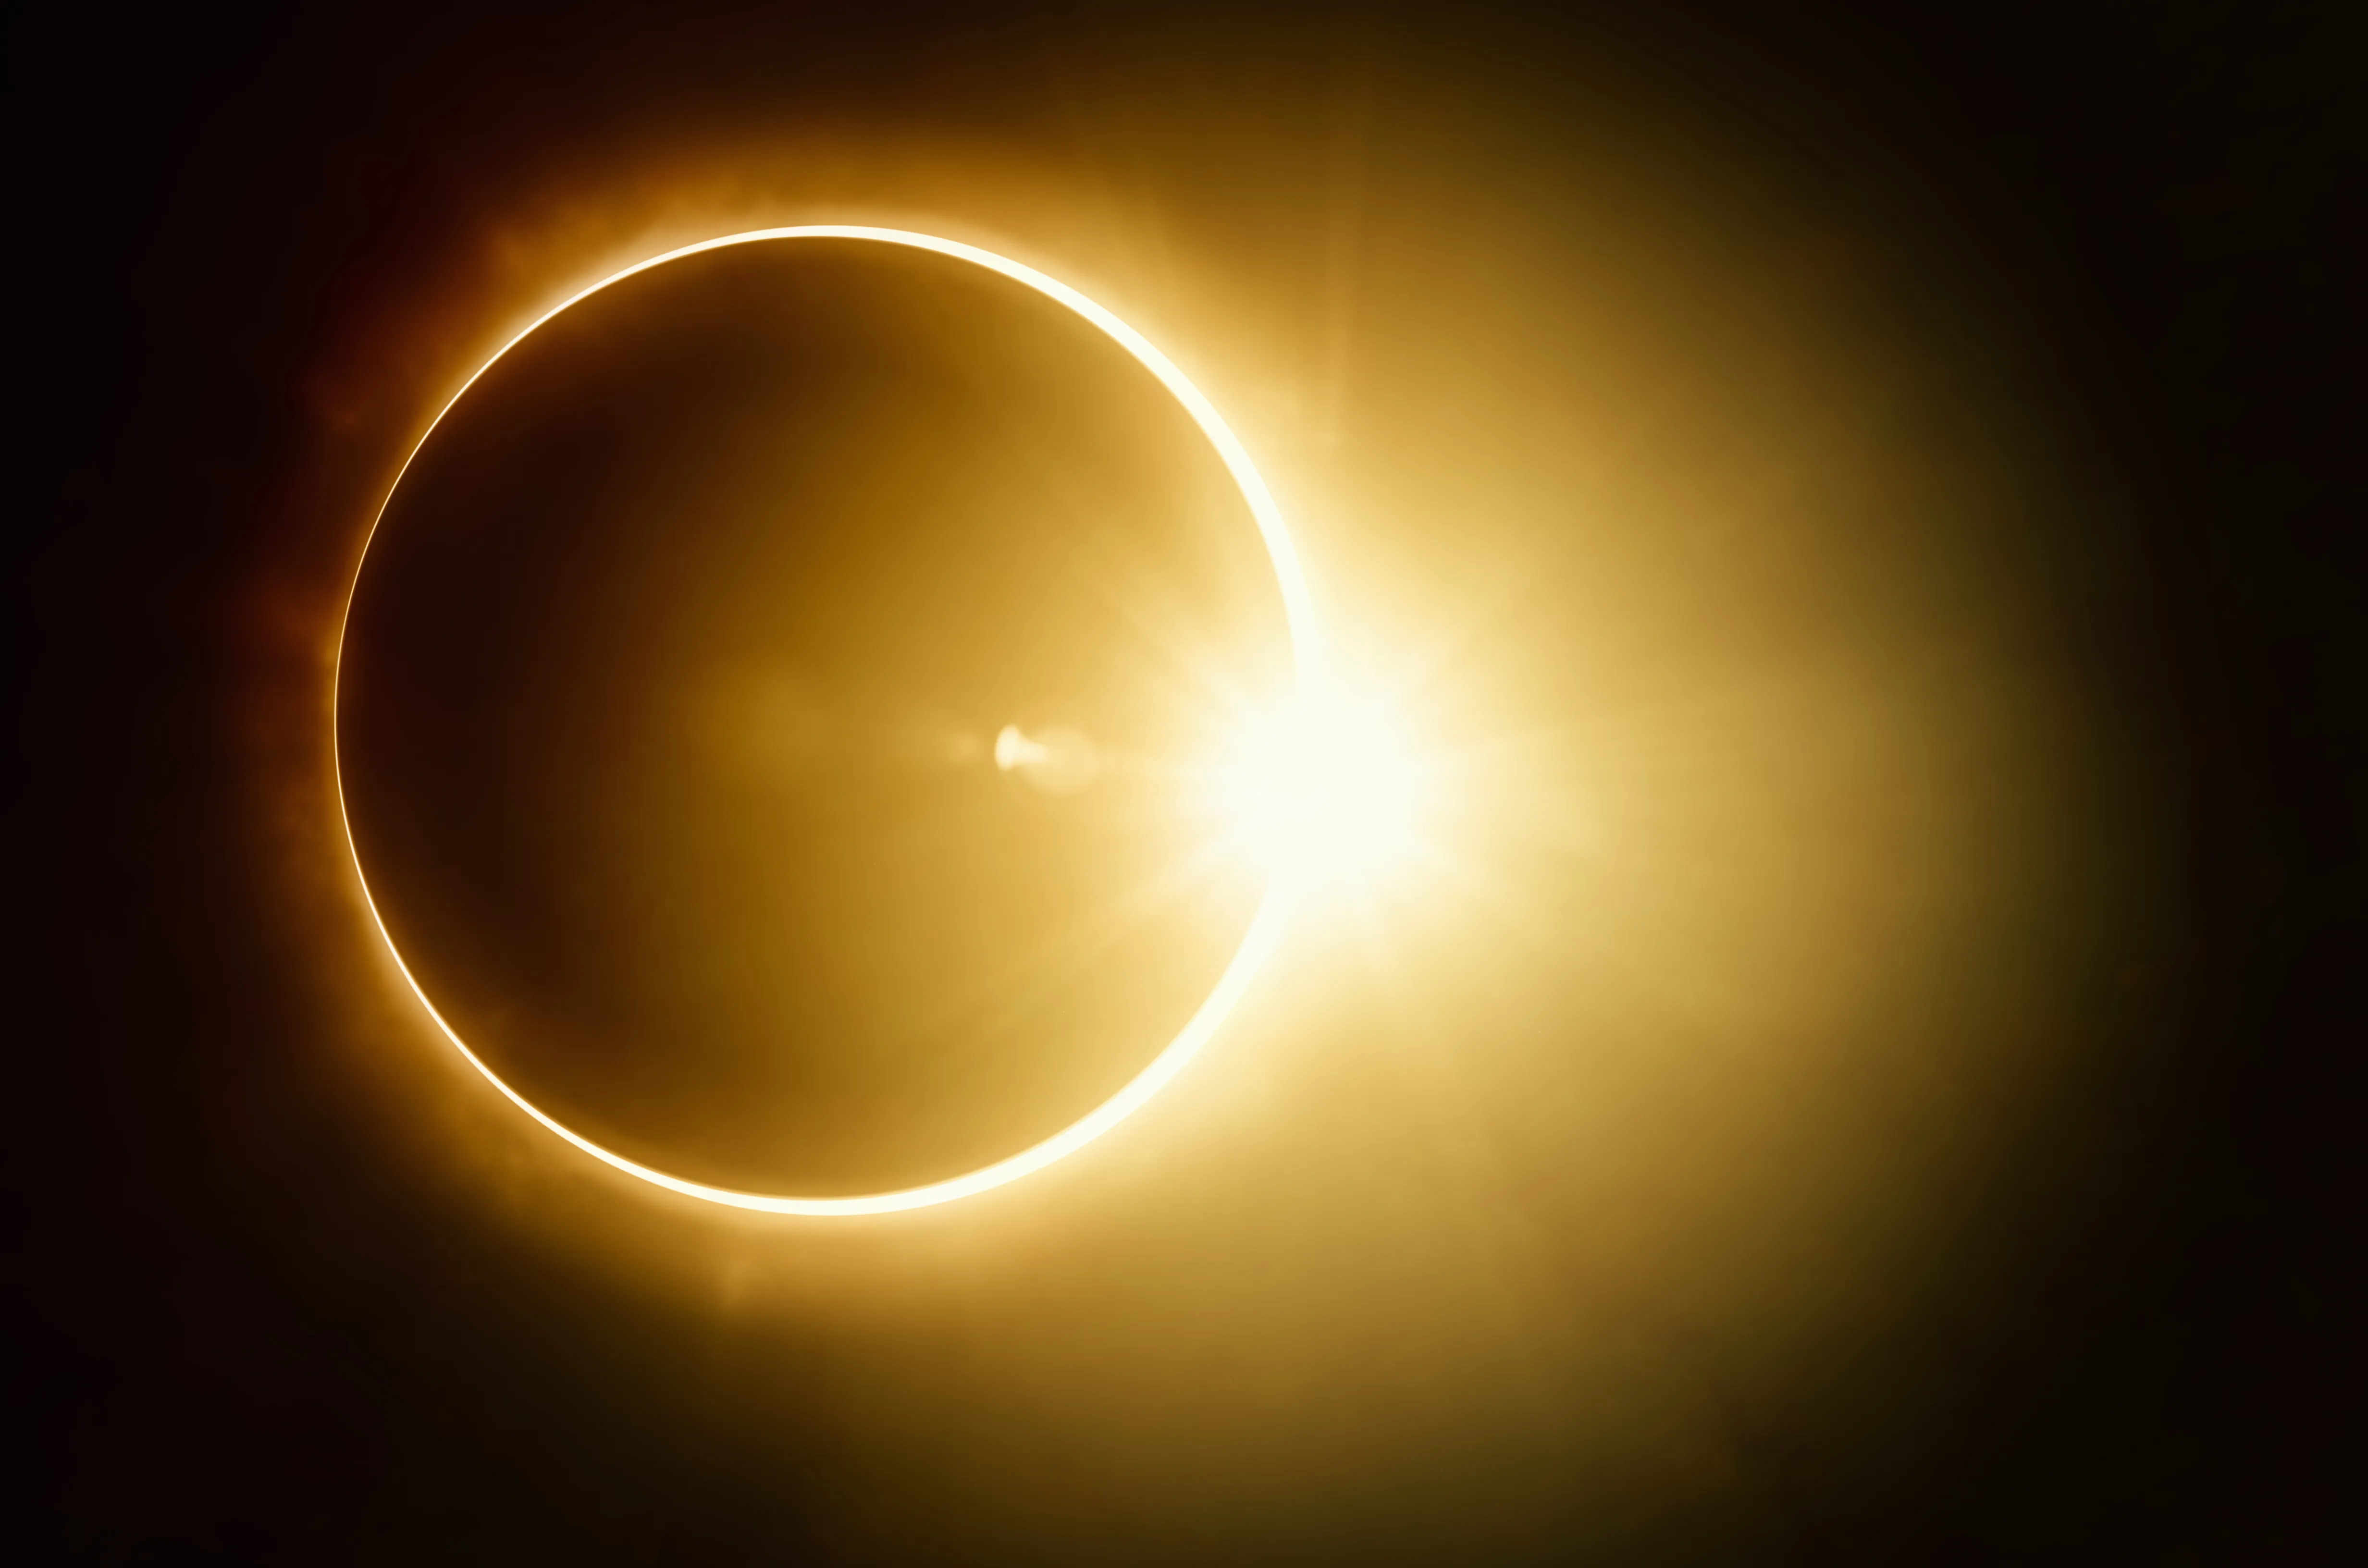 Solar Eclipse during pregnancy